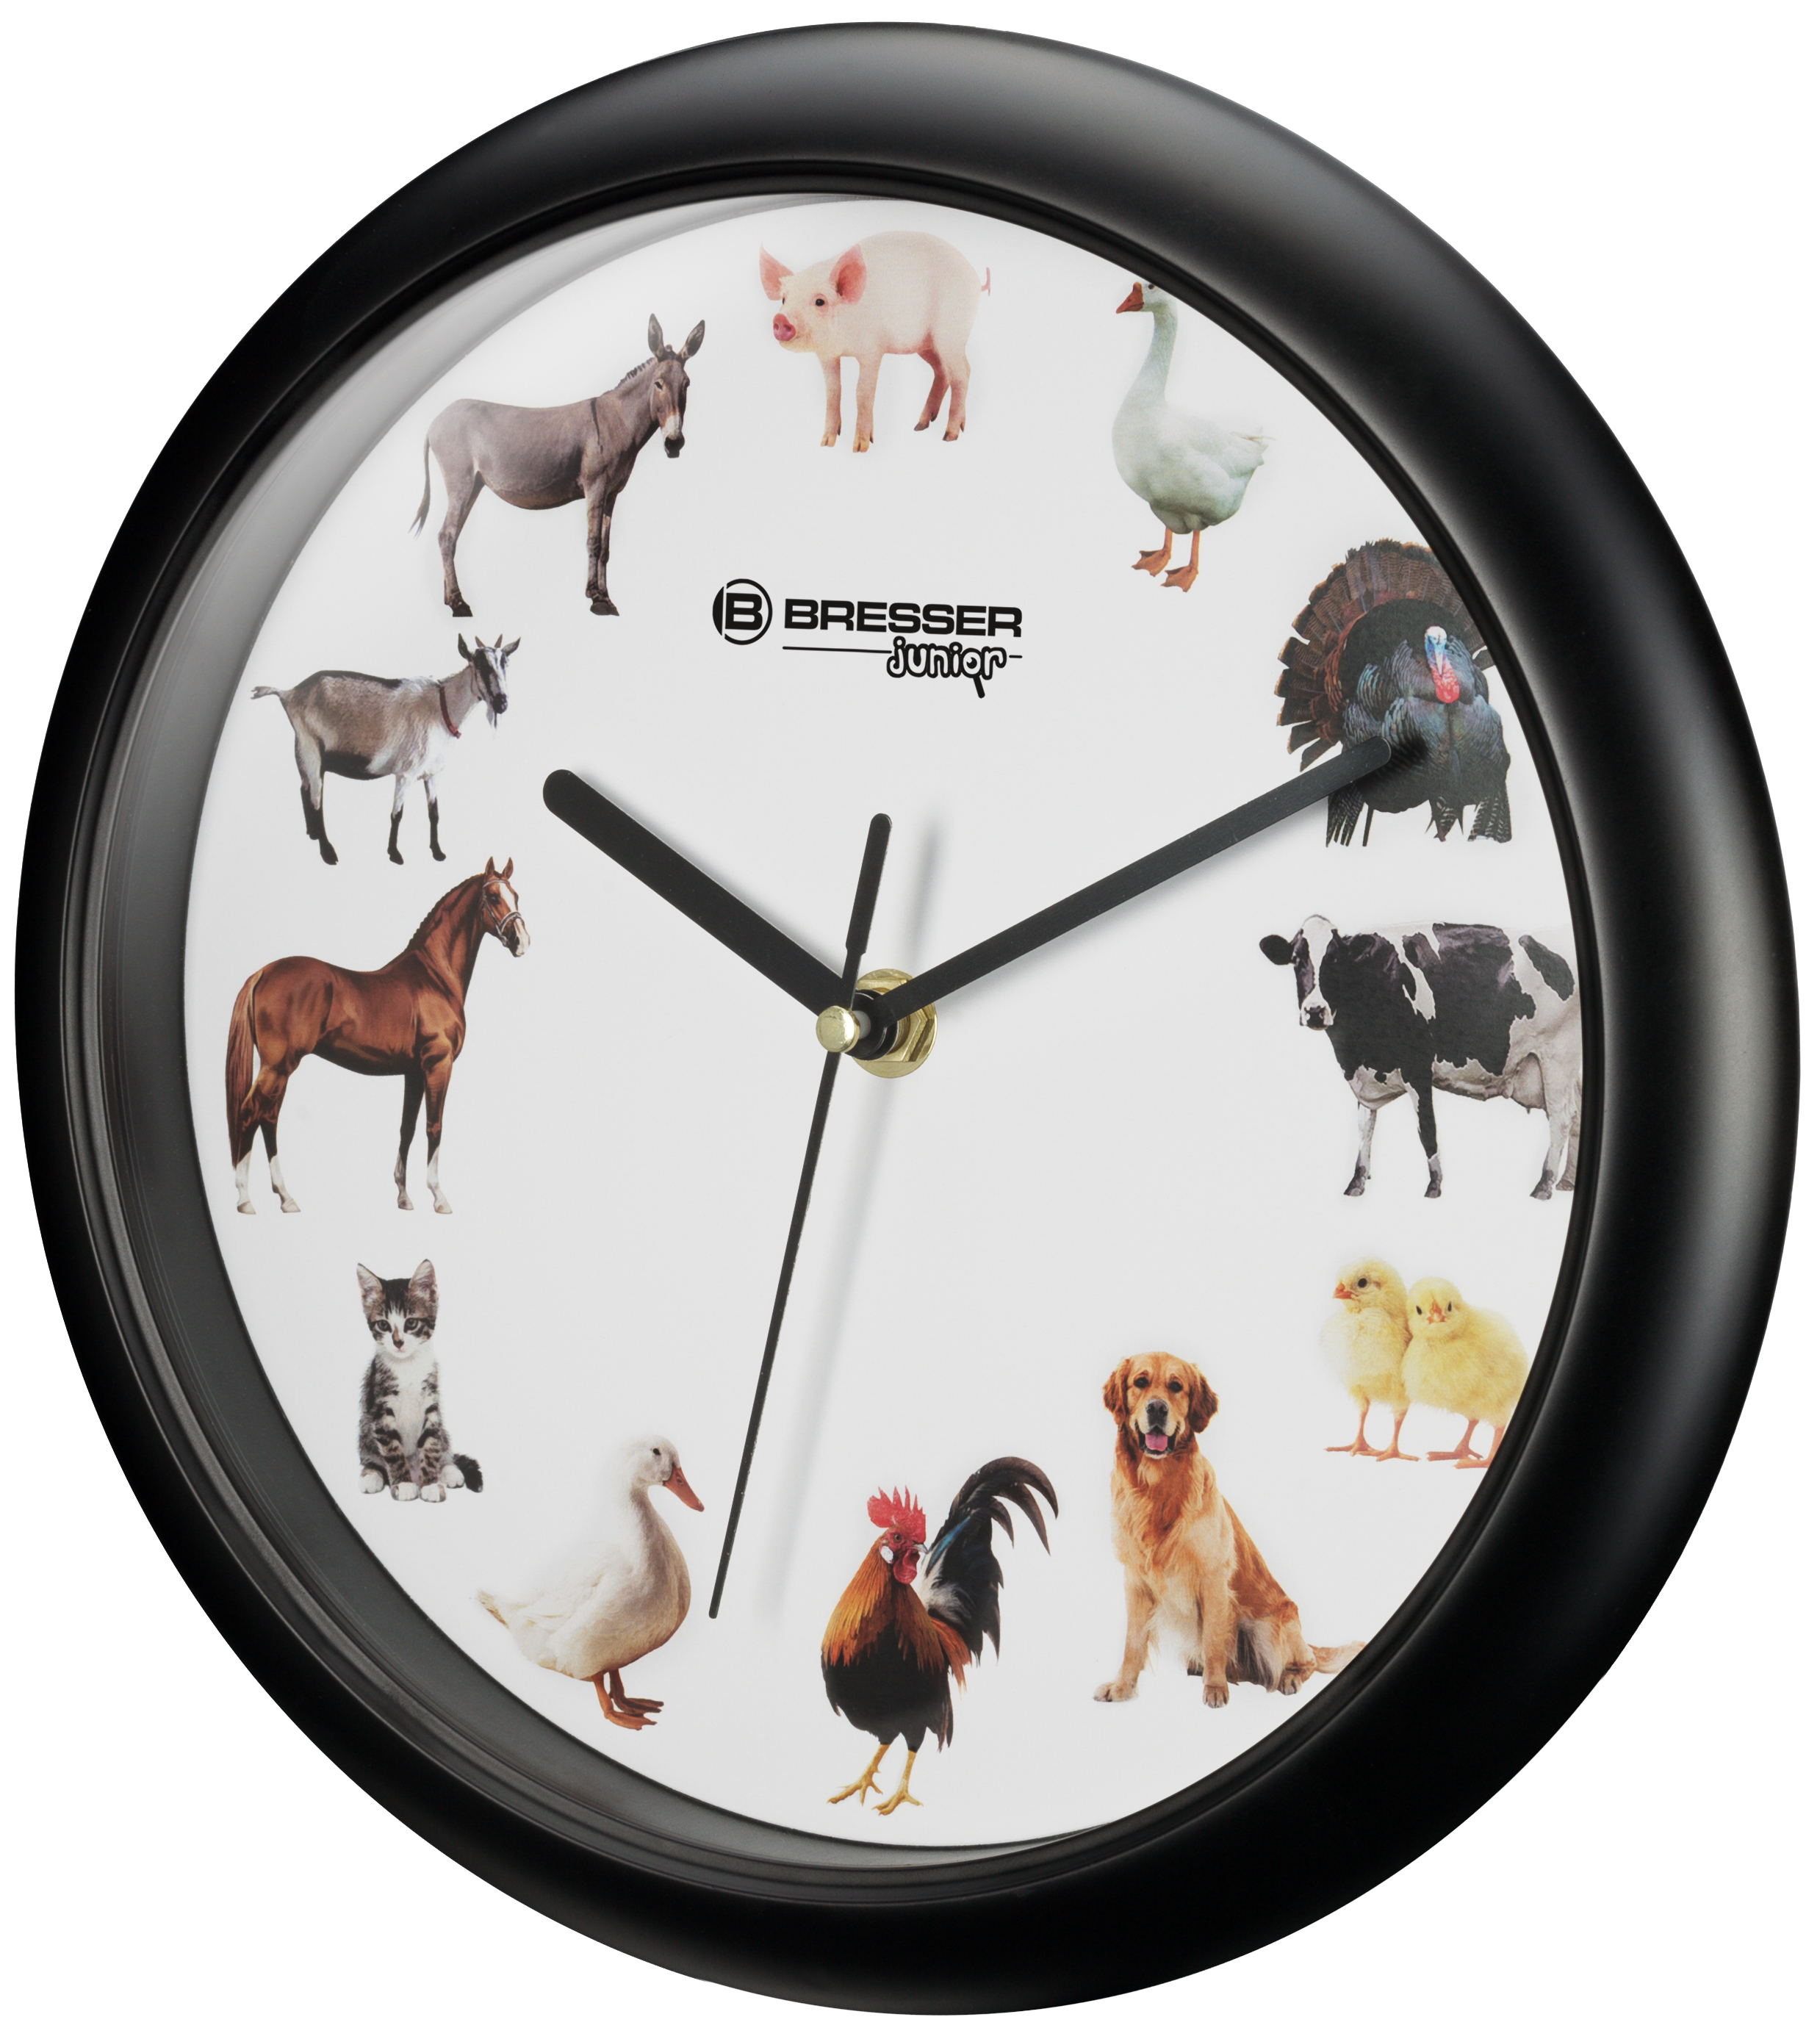 Bresser | BRESSER JUNIOR Children's Wall Clock with Animal Sounds | Expand  Your Horizon